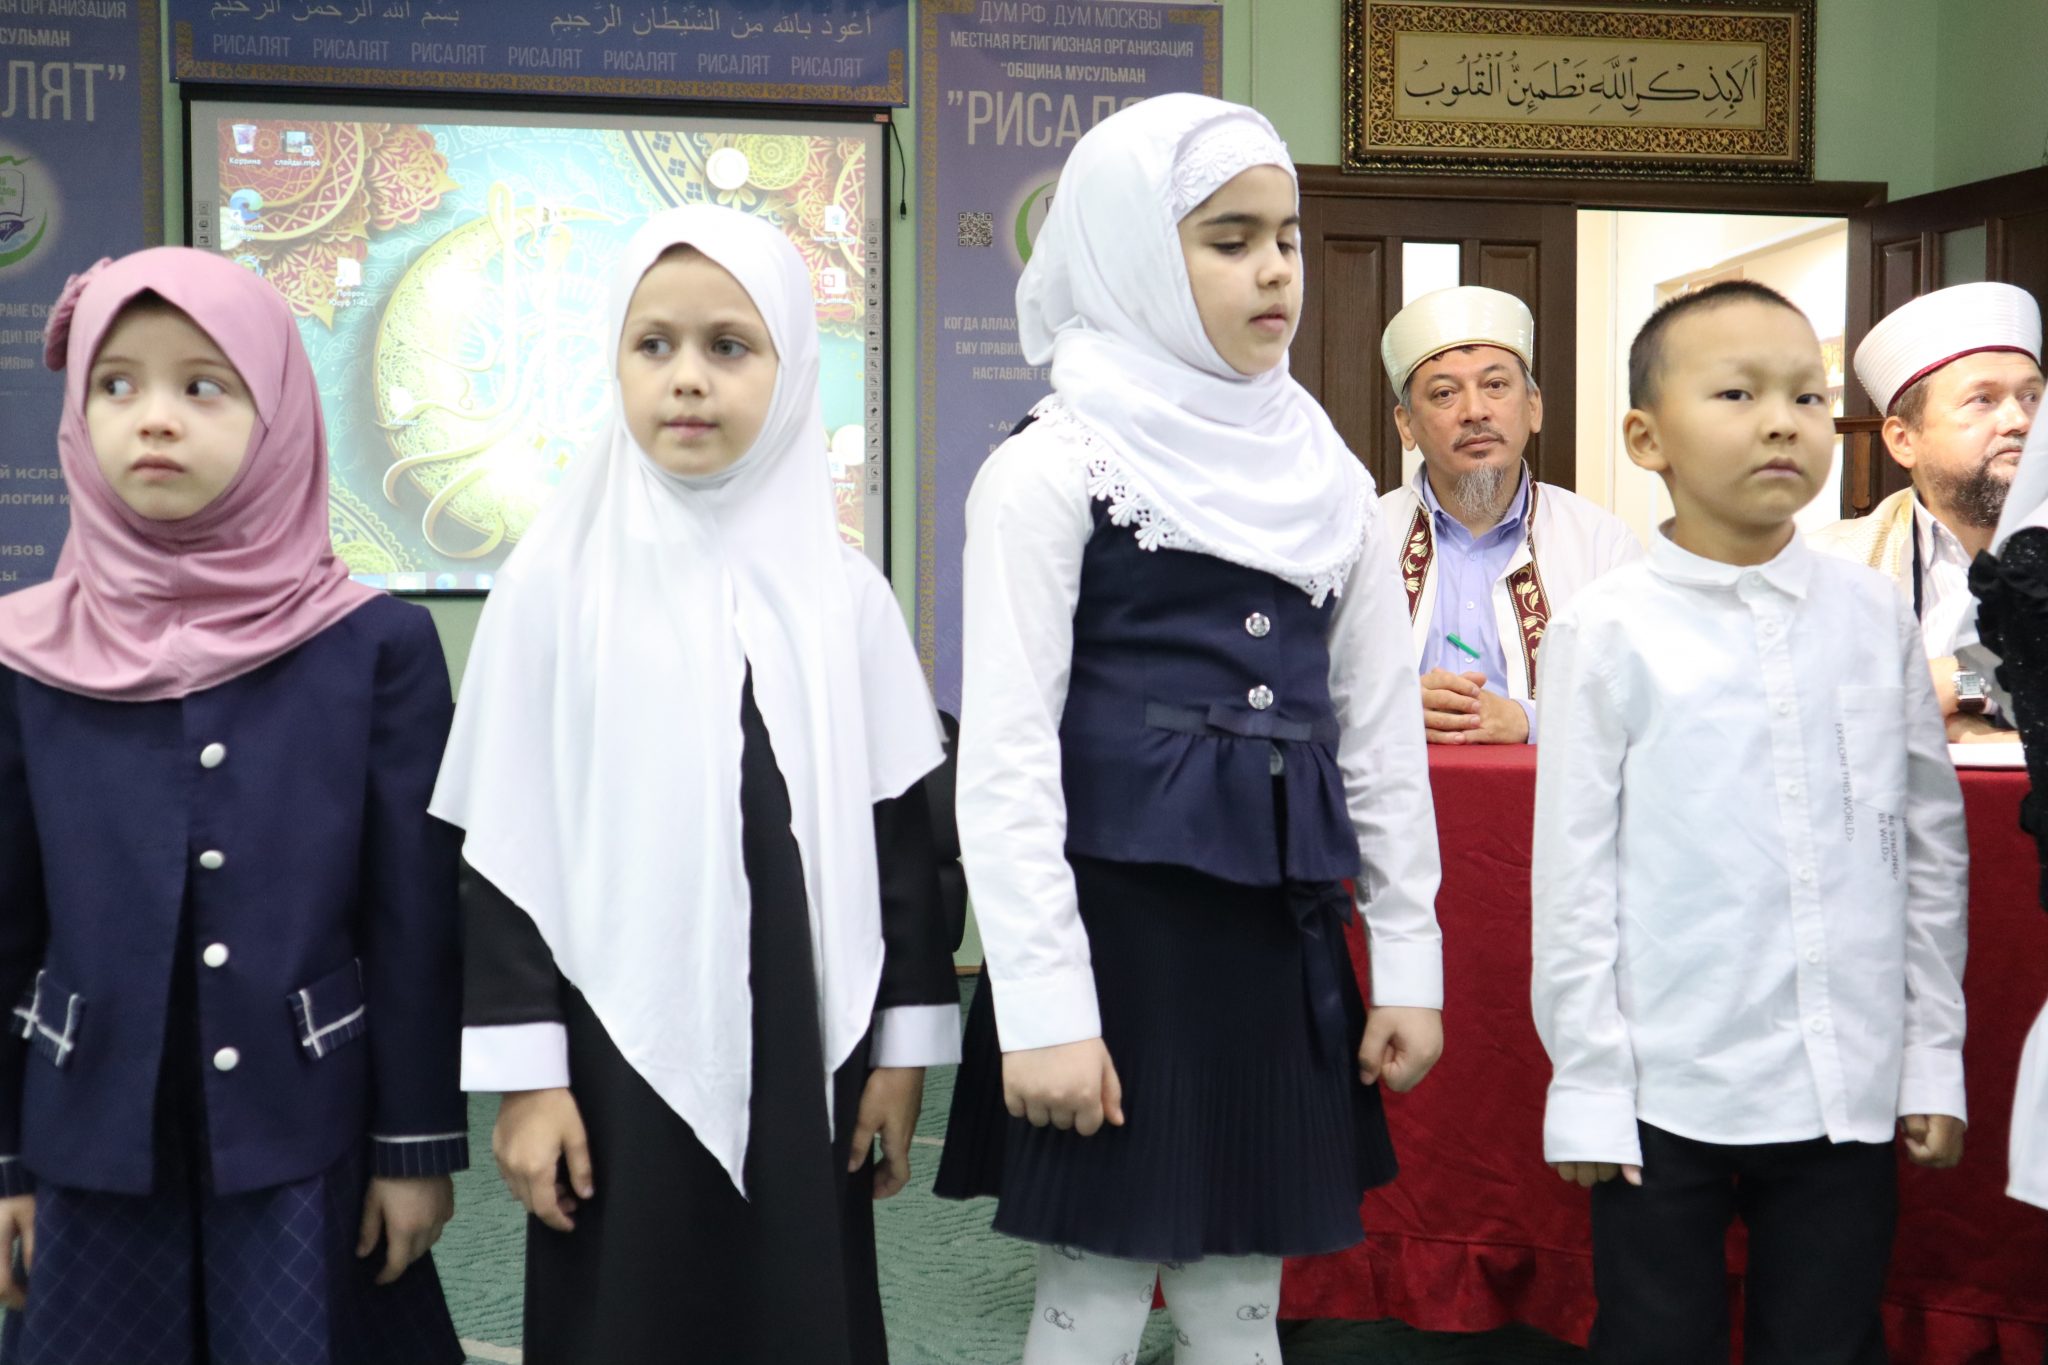 Средняя школа у мусульман. Рисолят мусульманская школа в Москве. Мусульманская община. Мусульмане дети в школе. Современные мусульманские школы.